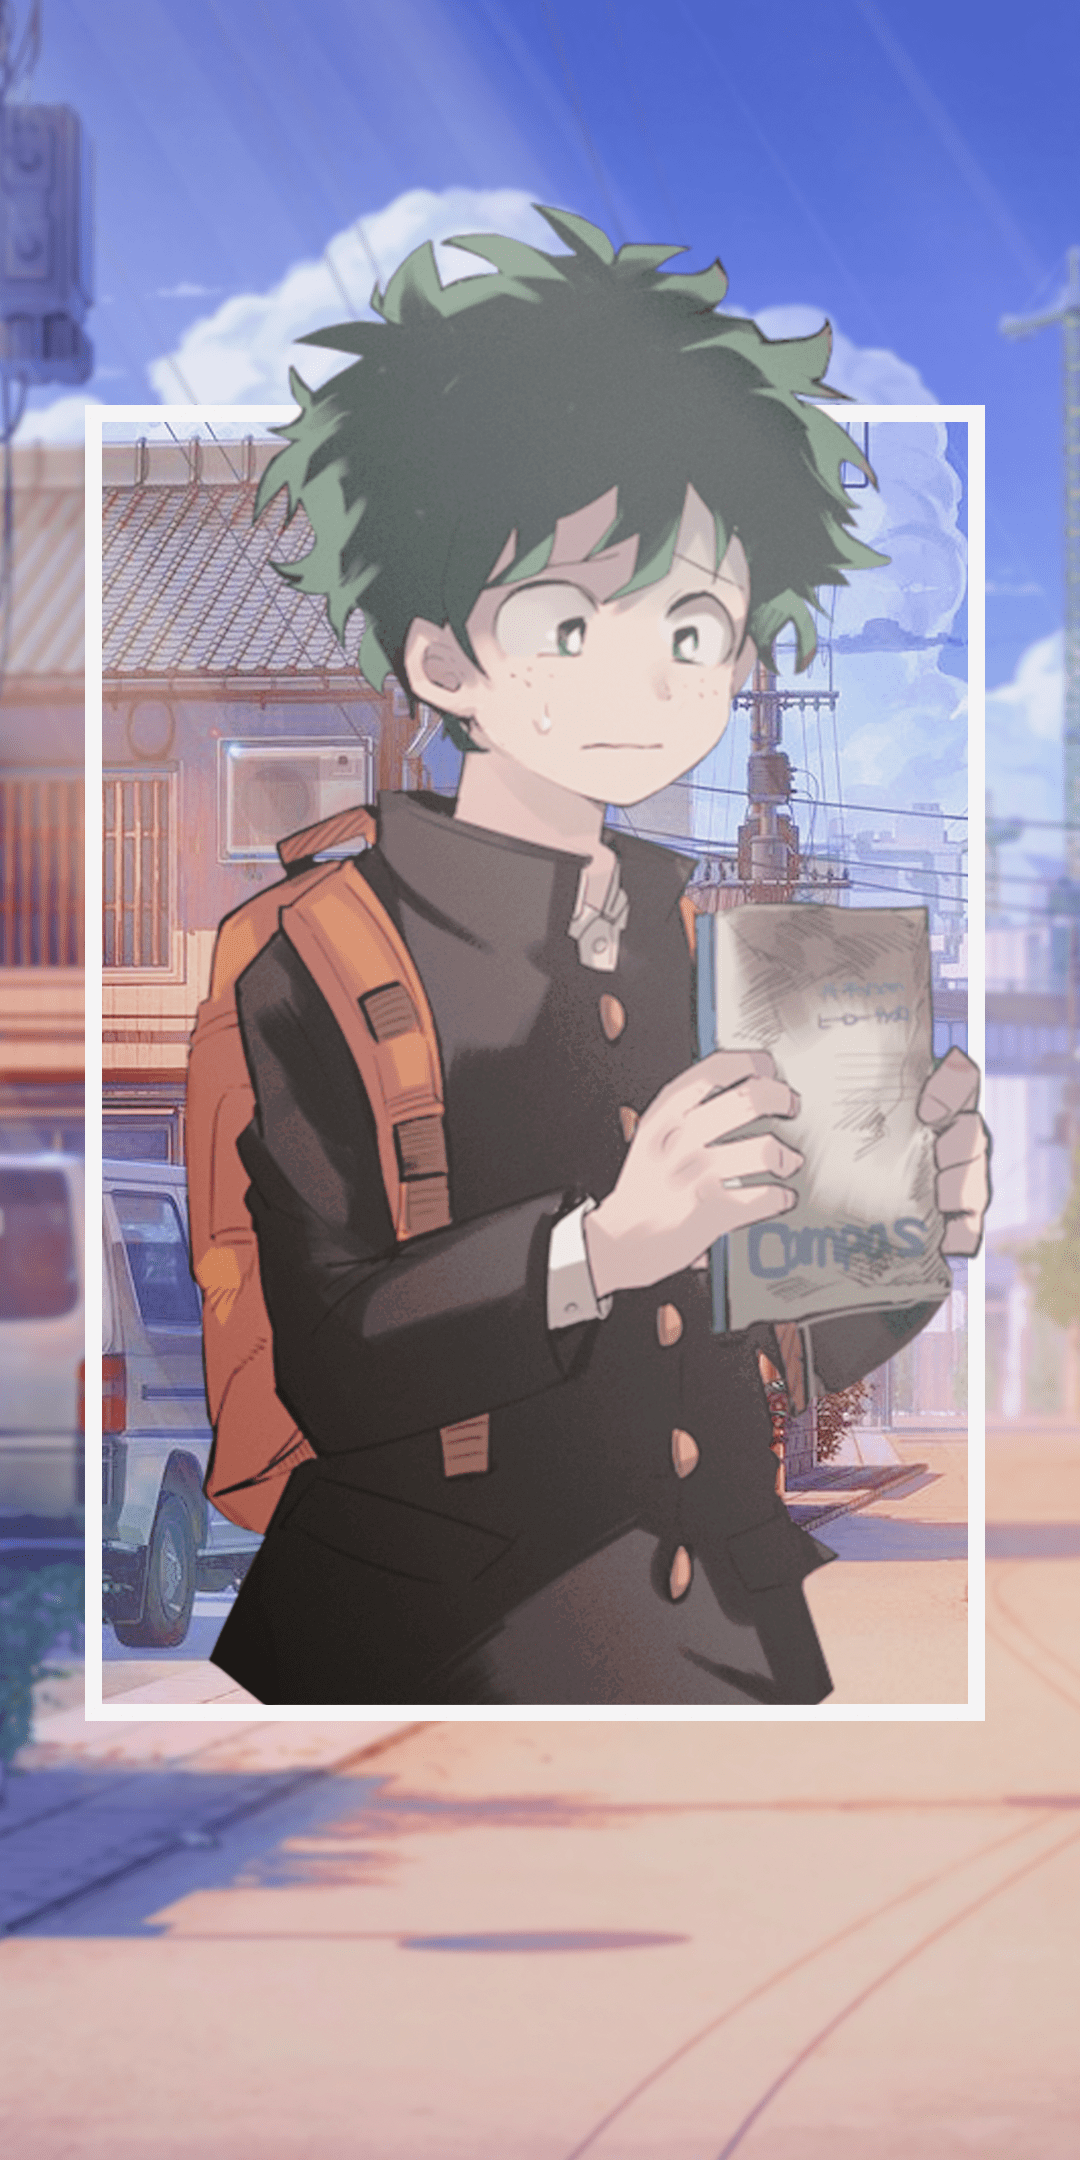 Wallpaper / Anime My Hero Academia Phone Wallpaper, Izuku Midoriya, 1080x2160 free download